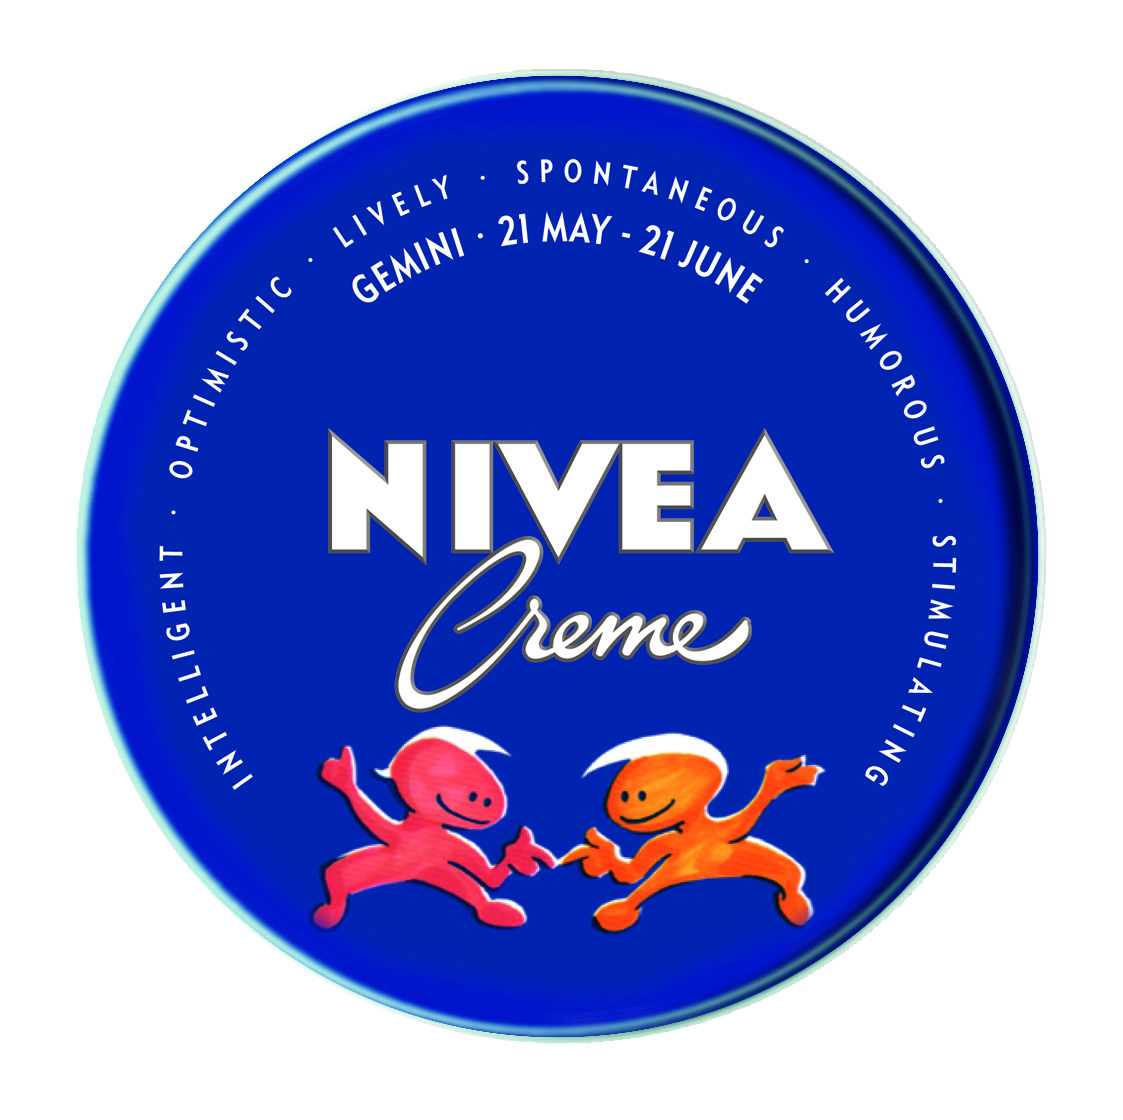 NIVEA Creme Gemini.jpg